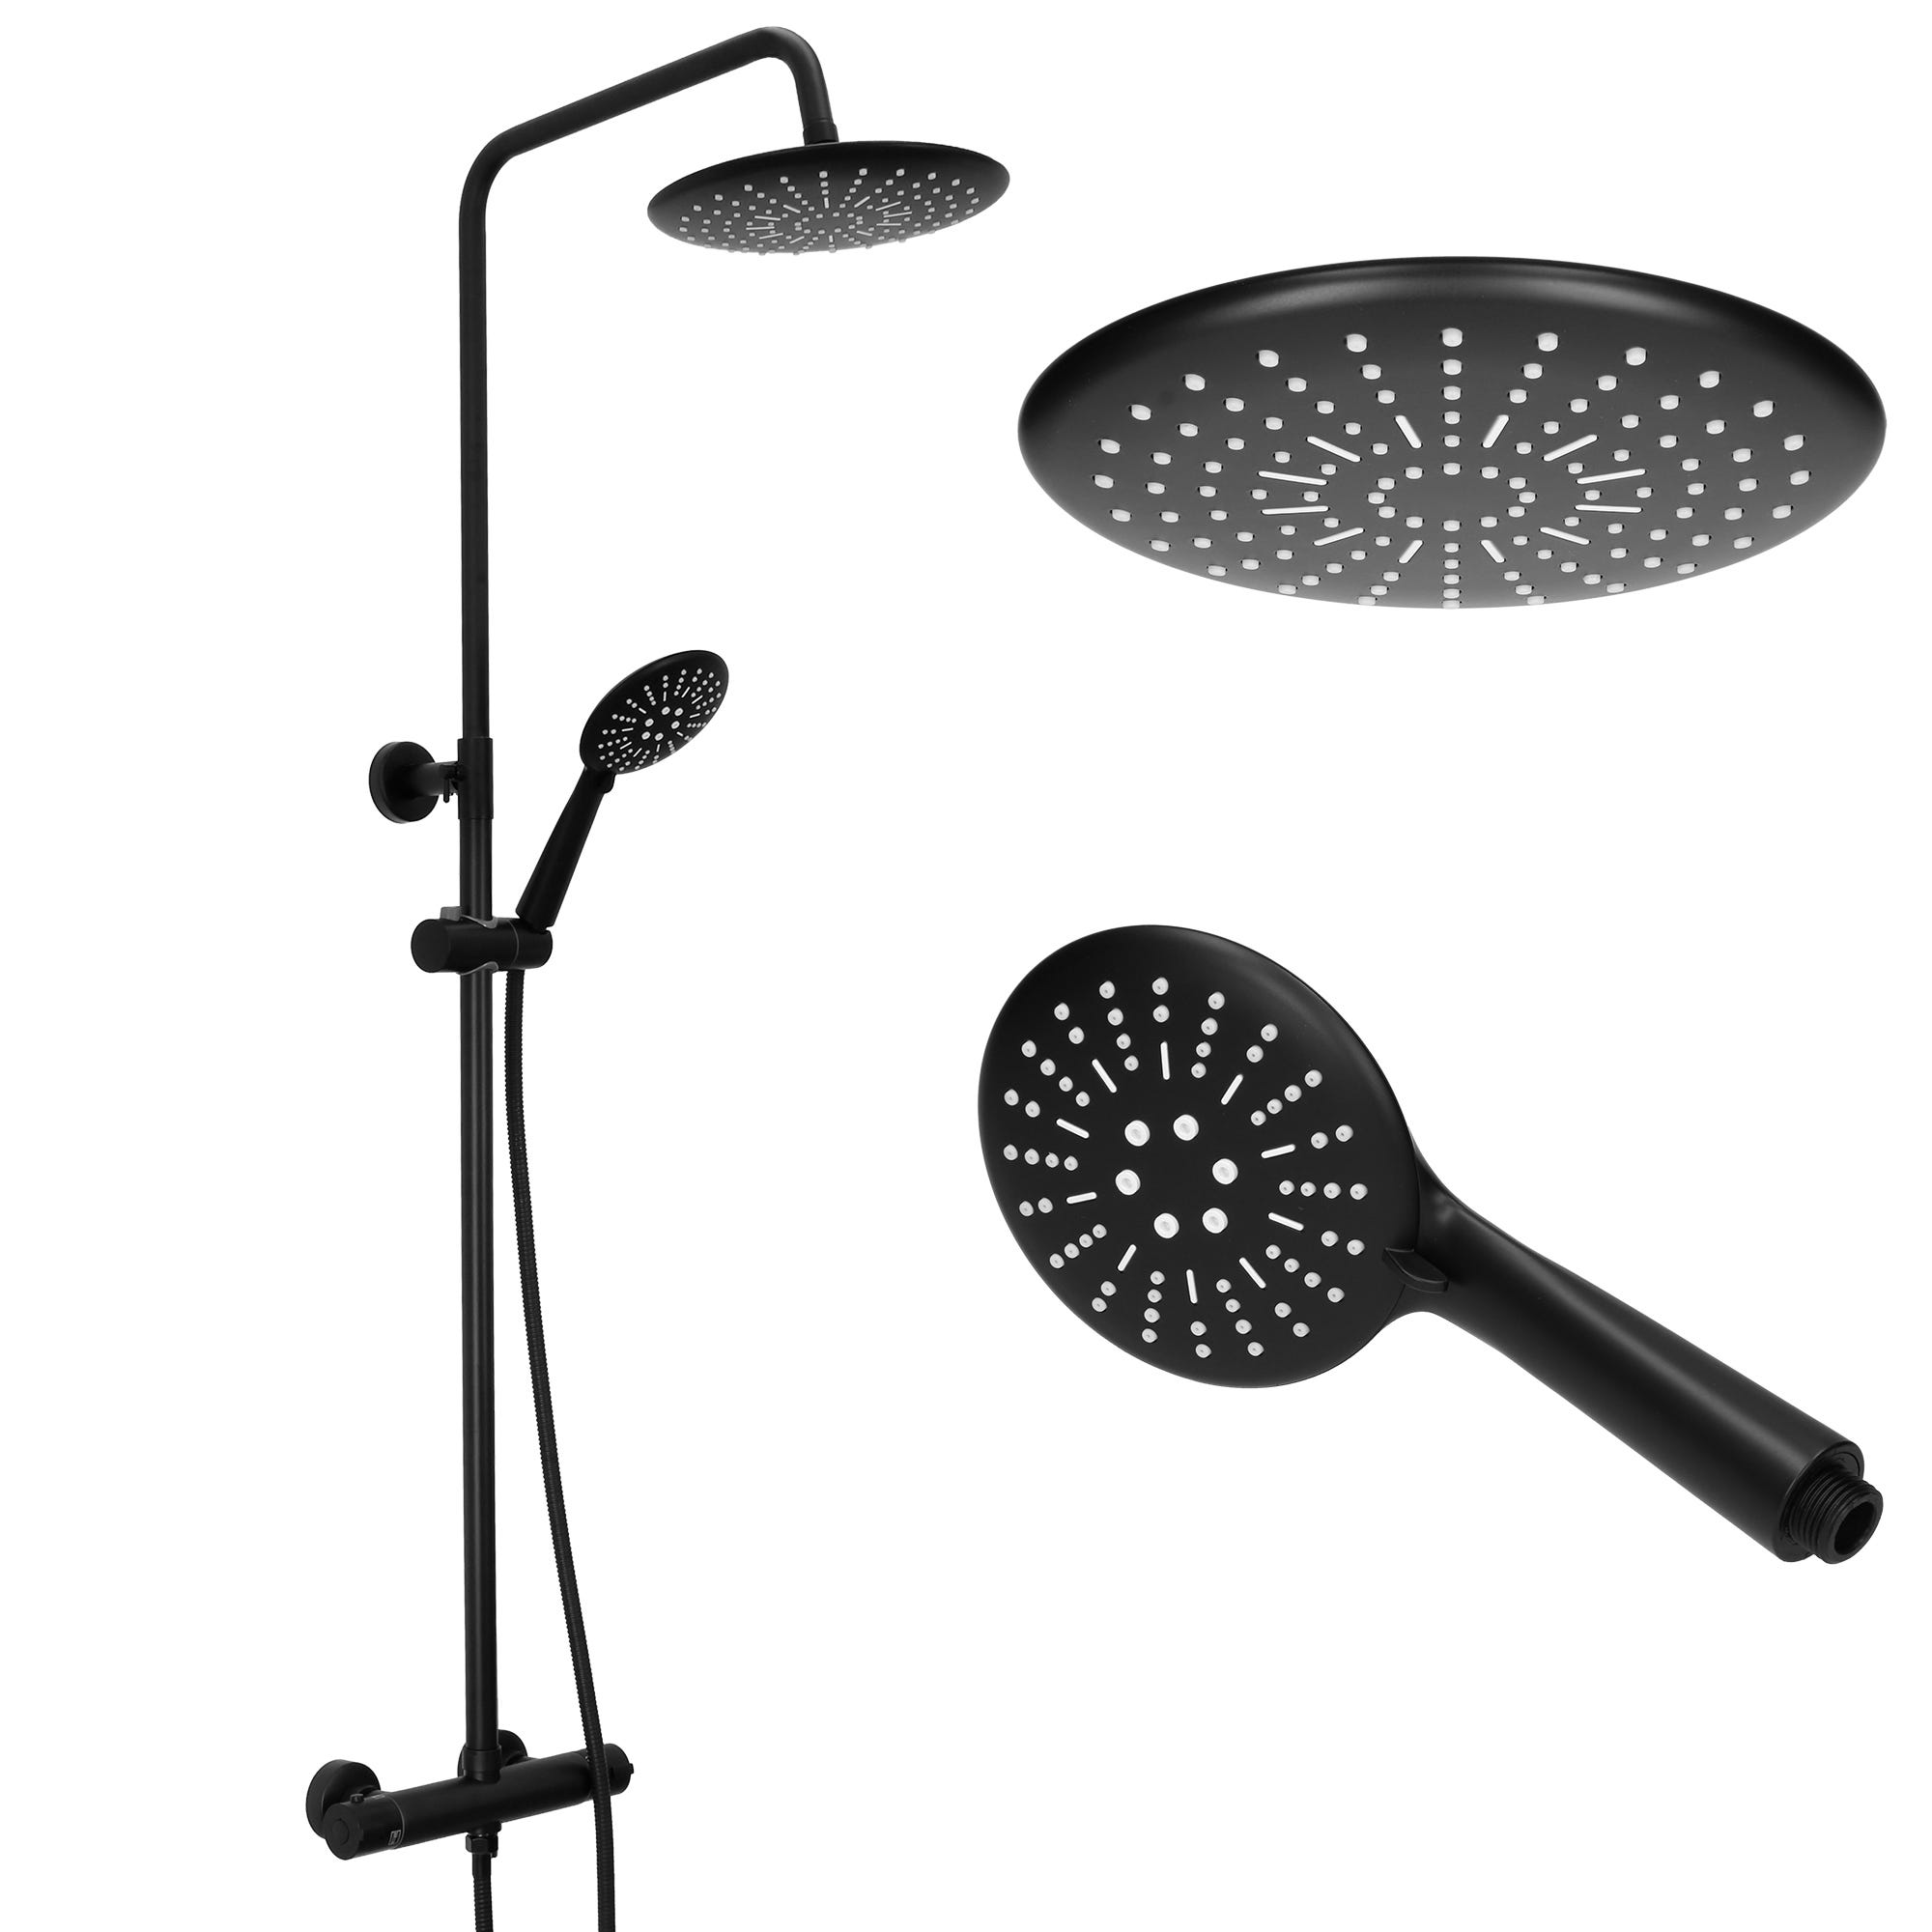 Columna de ducha de 3 funciones, sistema de ducha negro, juego de ducha de  lluvia que incluye cabezal de ducha, ducha de mano, riel ajustable